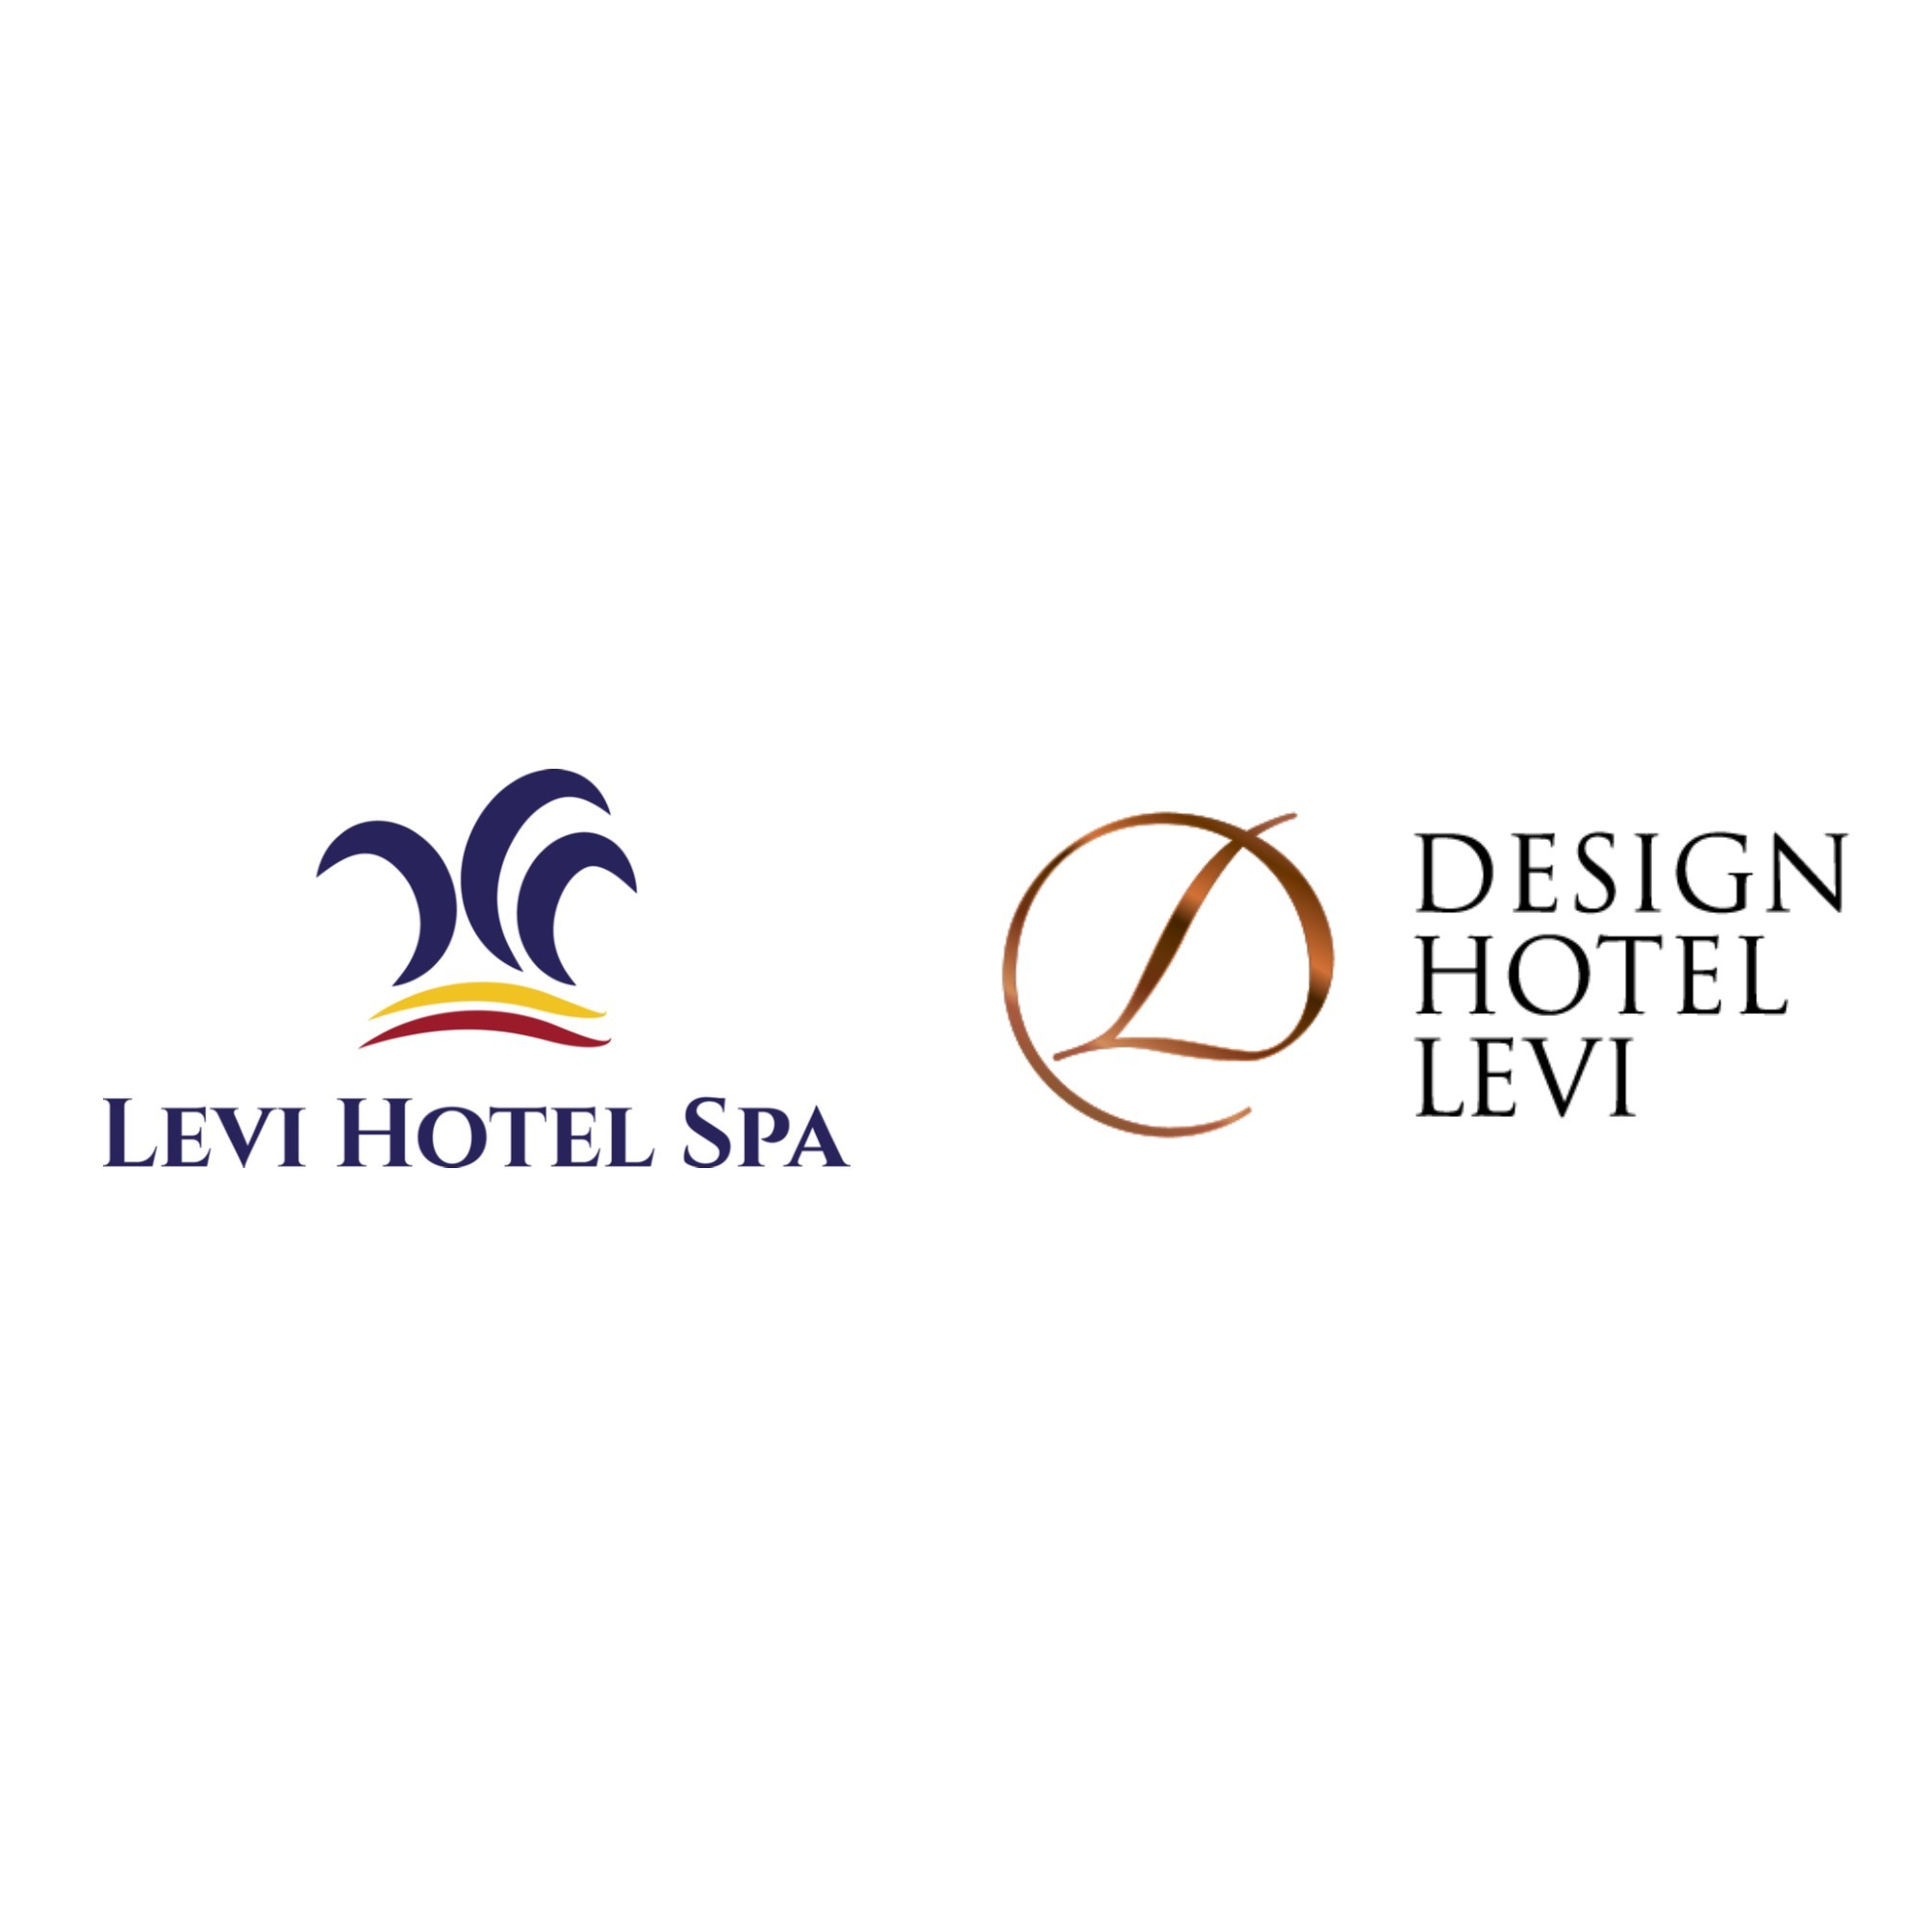 Levi Hotel Spa Resort